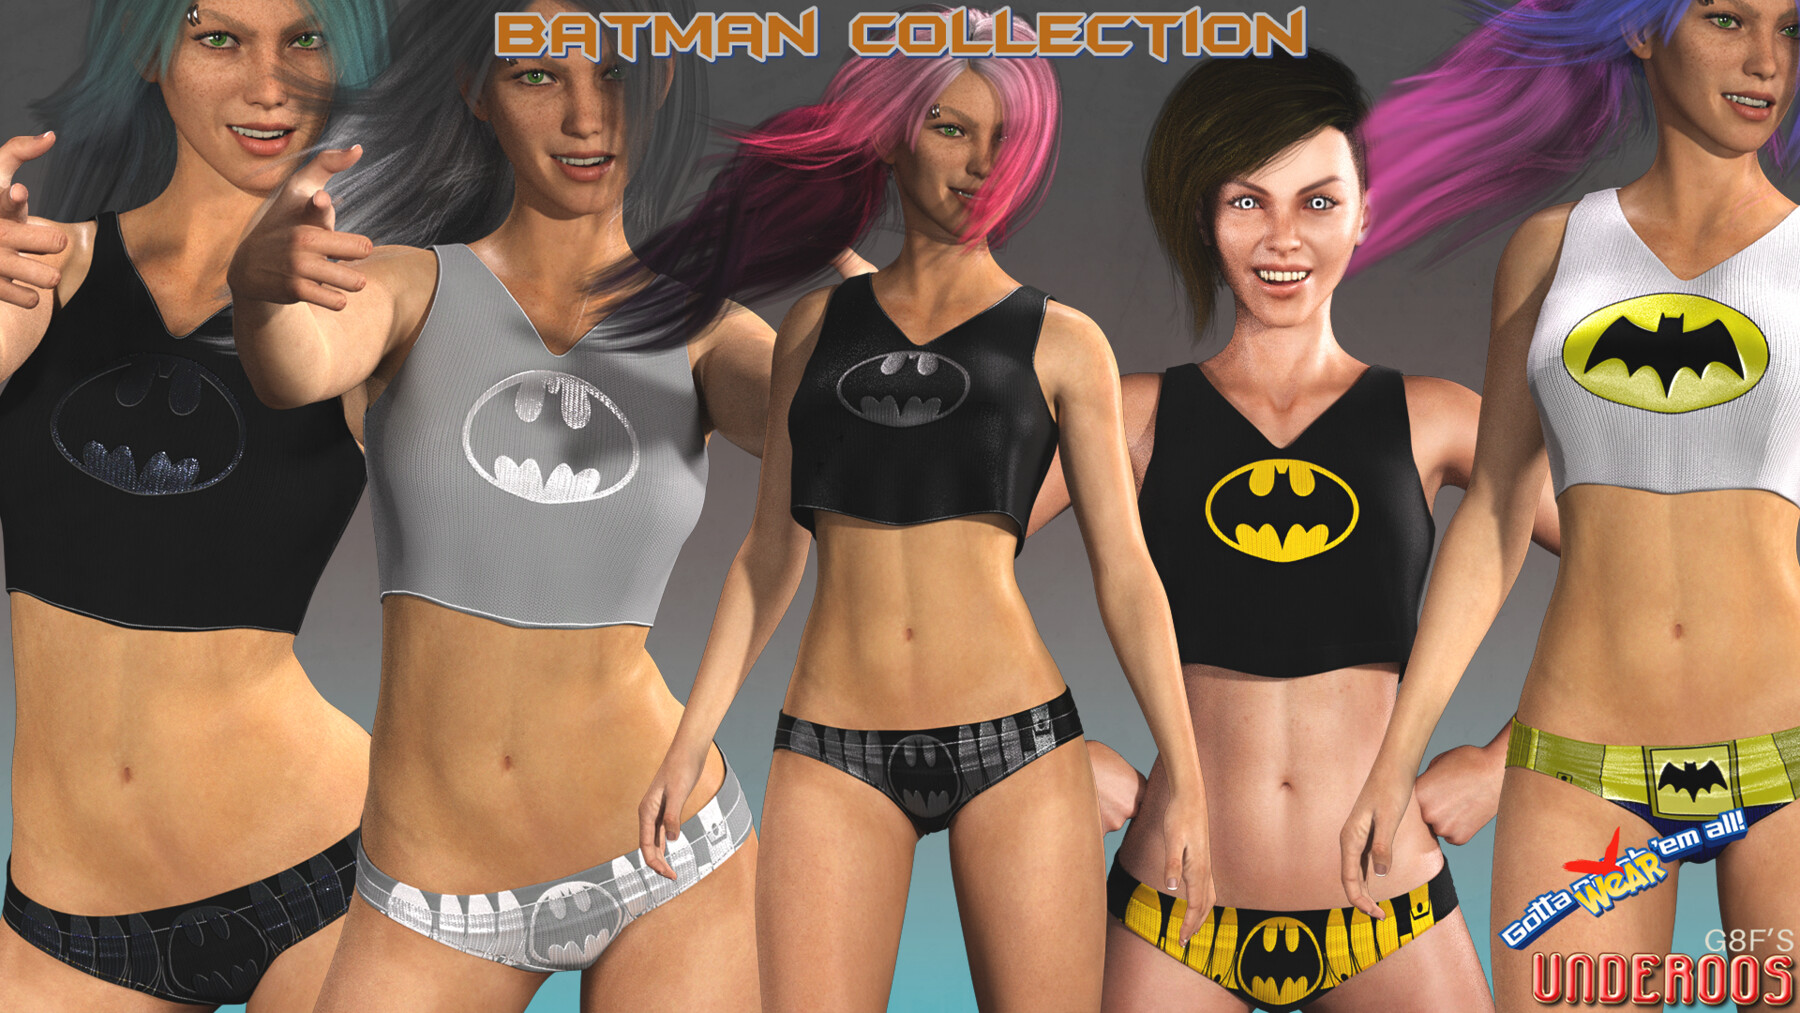 G8F Underoos Batman Collection